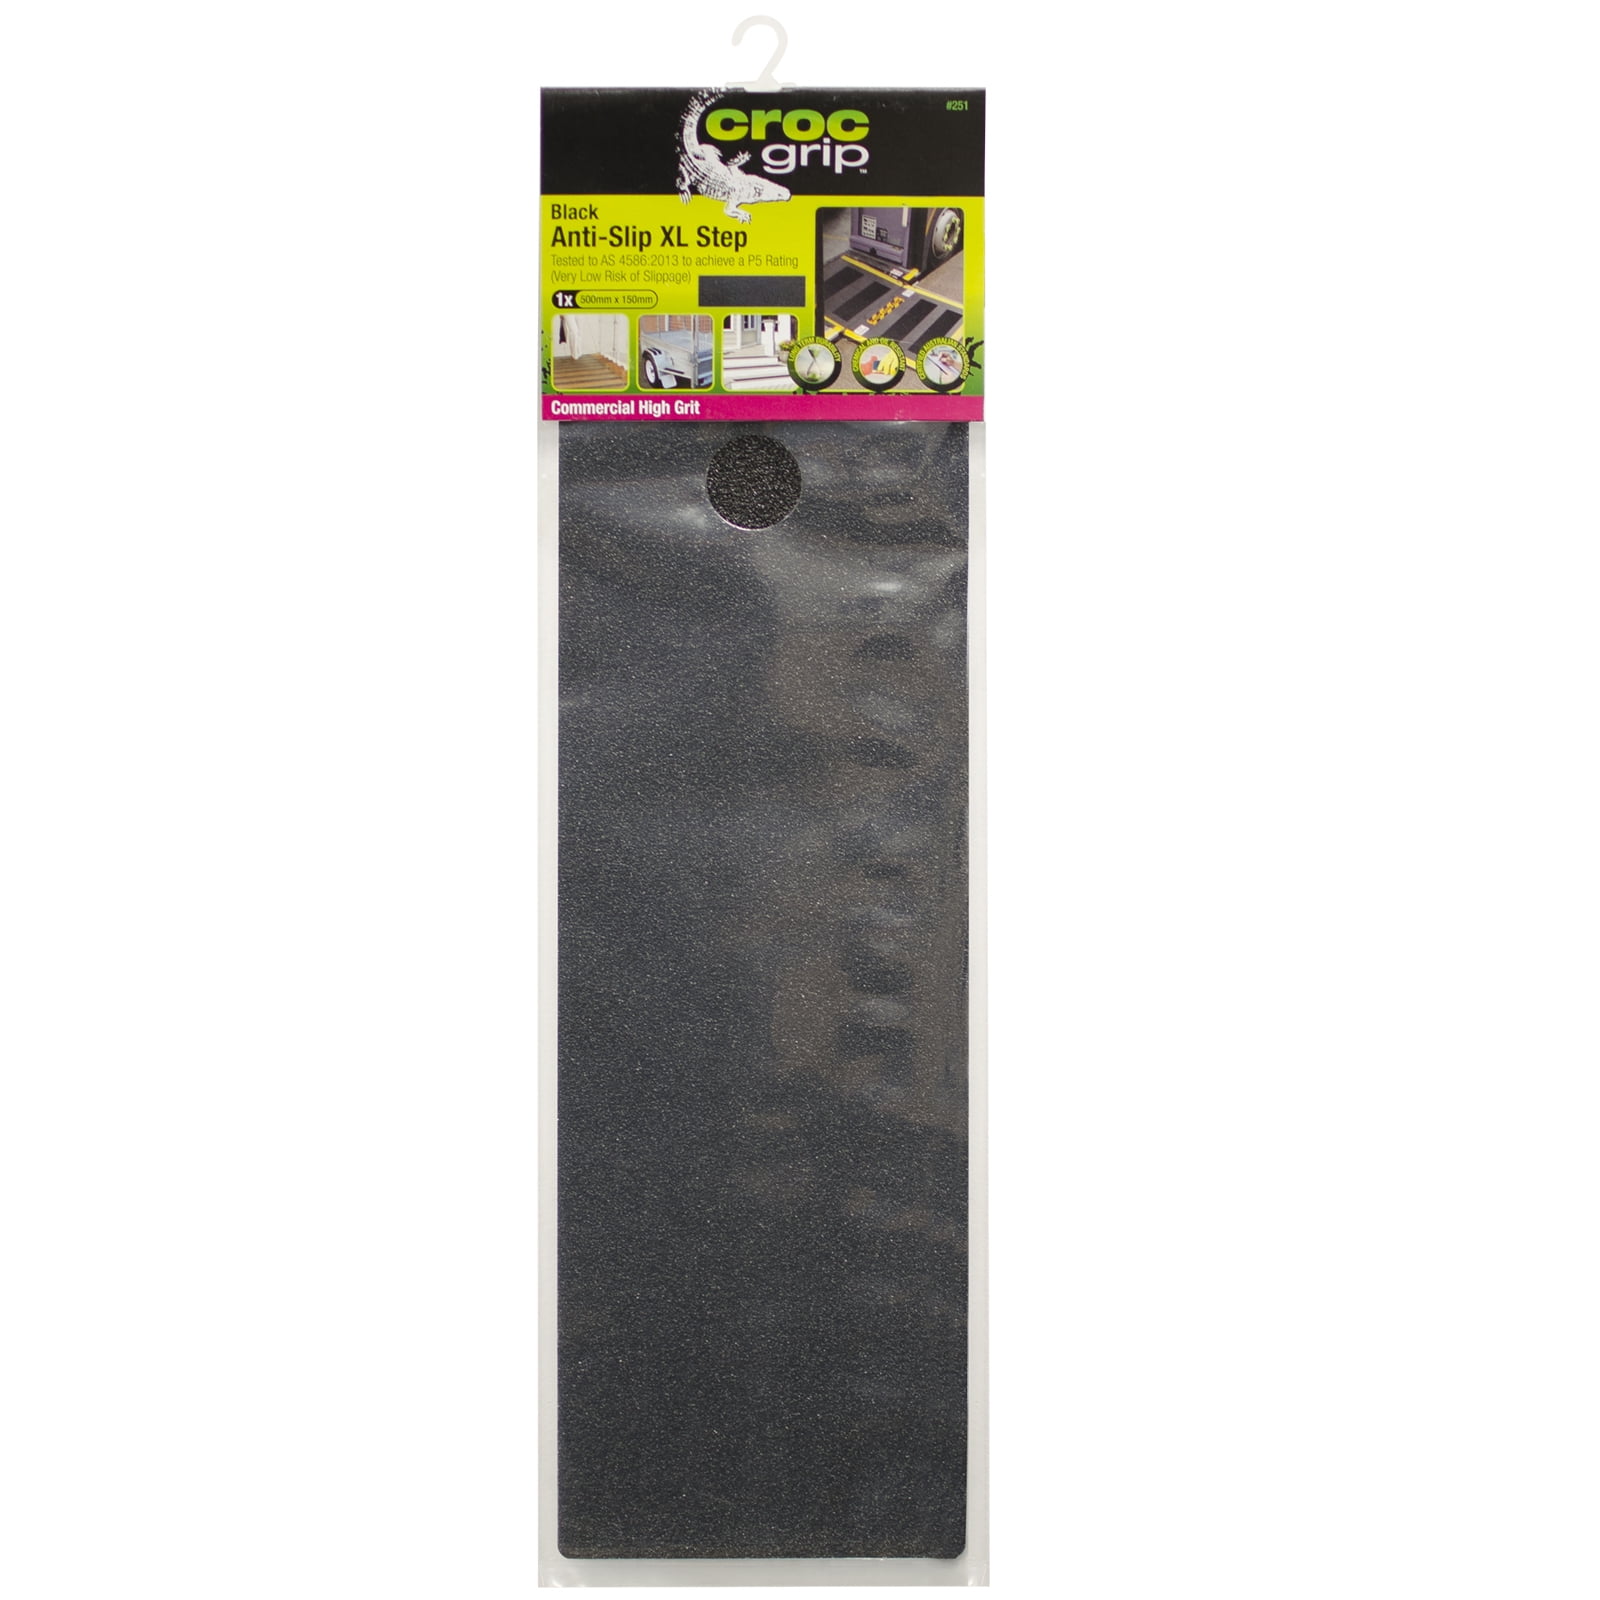 CROC grip™ Commercial High Grit XL Step Anti-Slip Tape, Black Tread 19. ...